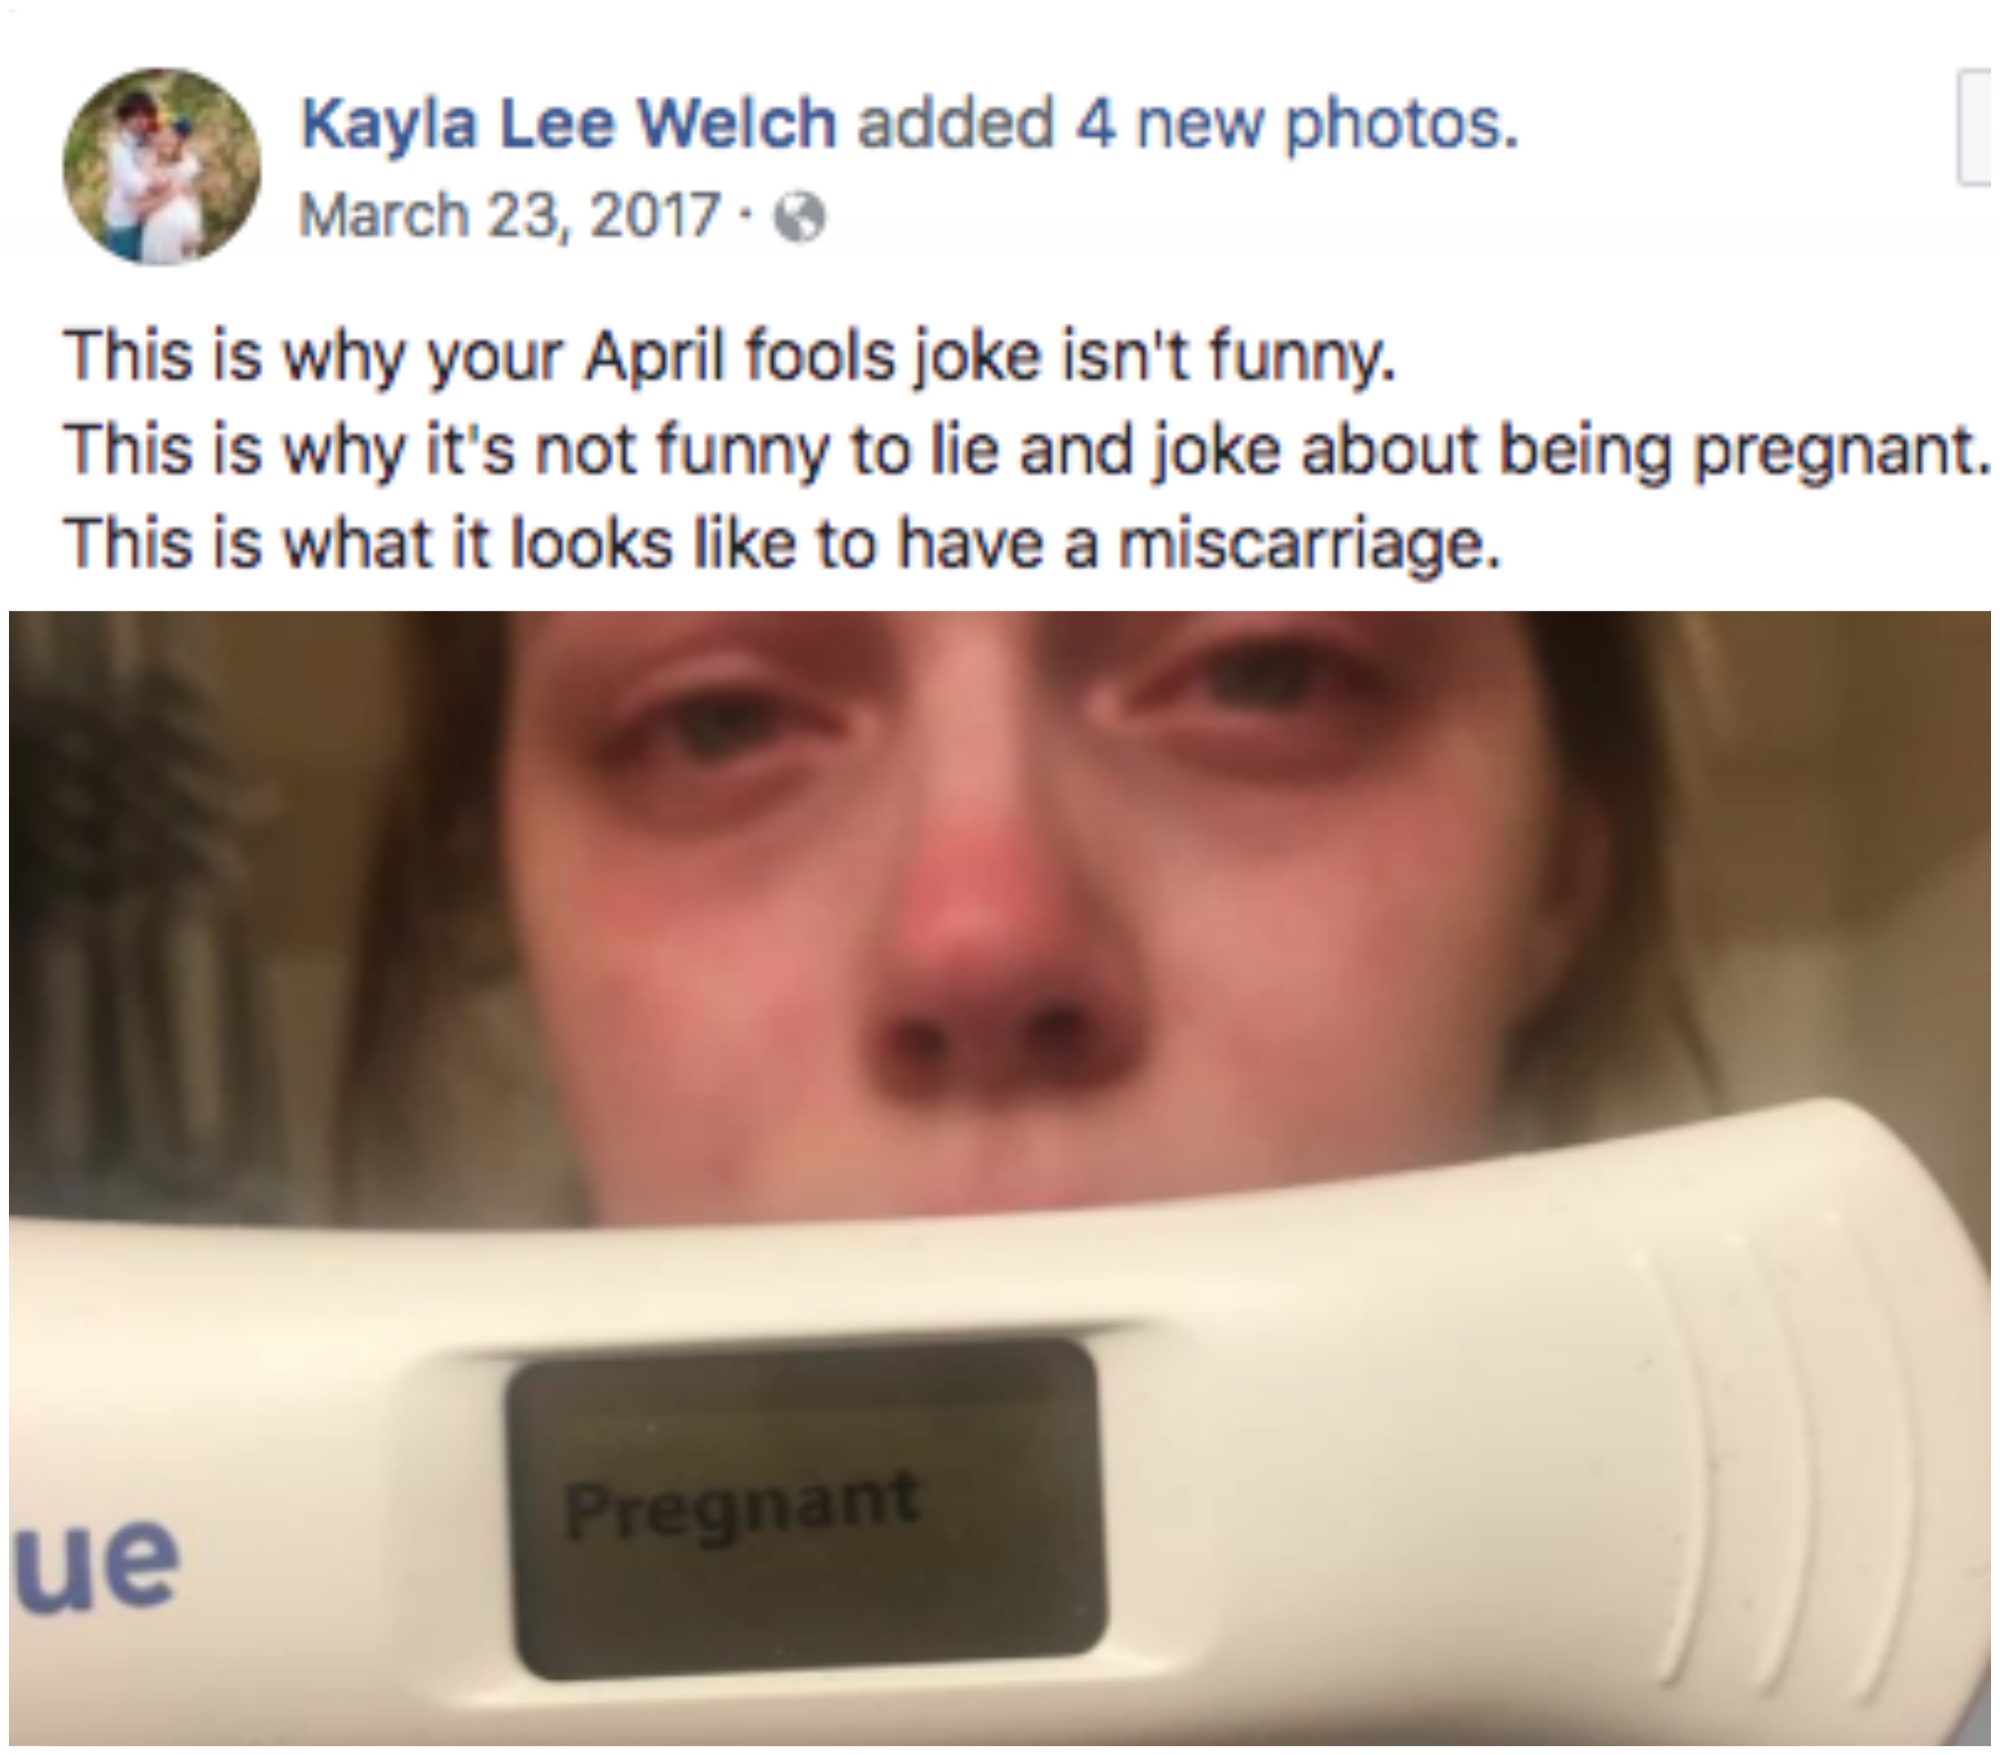 Fake Pregnancy April Fools Day Pranks Are Not Okay, Says This MomHelloGiggles photo